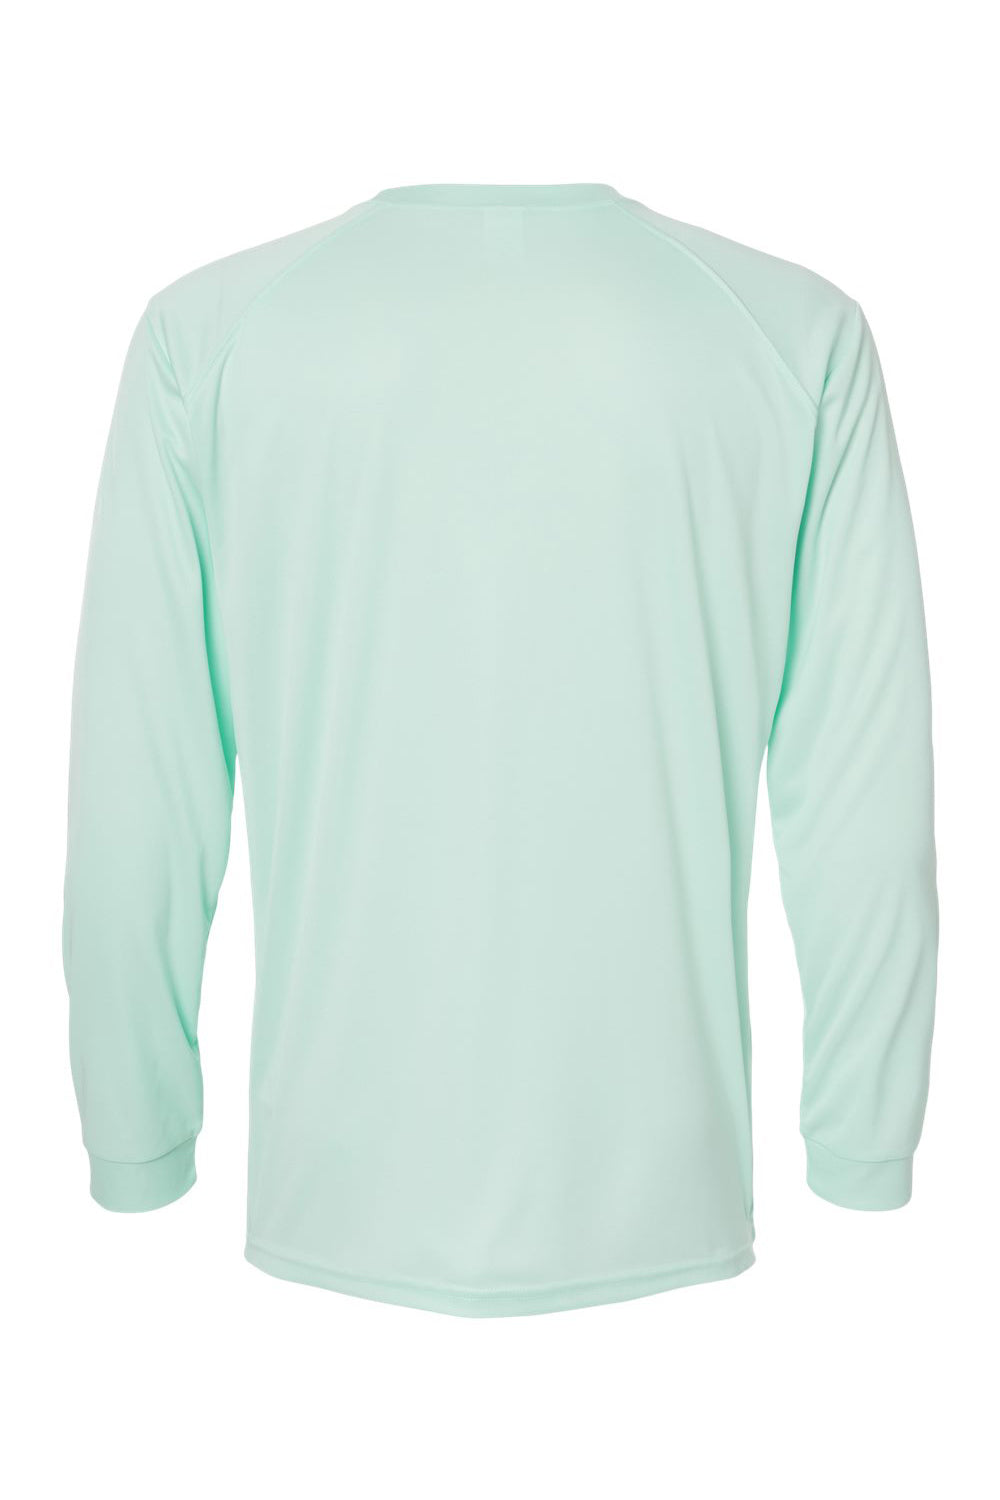 Paragon 210 Mens Islander Performance Long Sleeve Crewneck T-Shirt Mint Green Flat Back